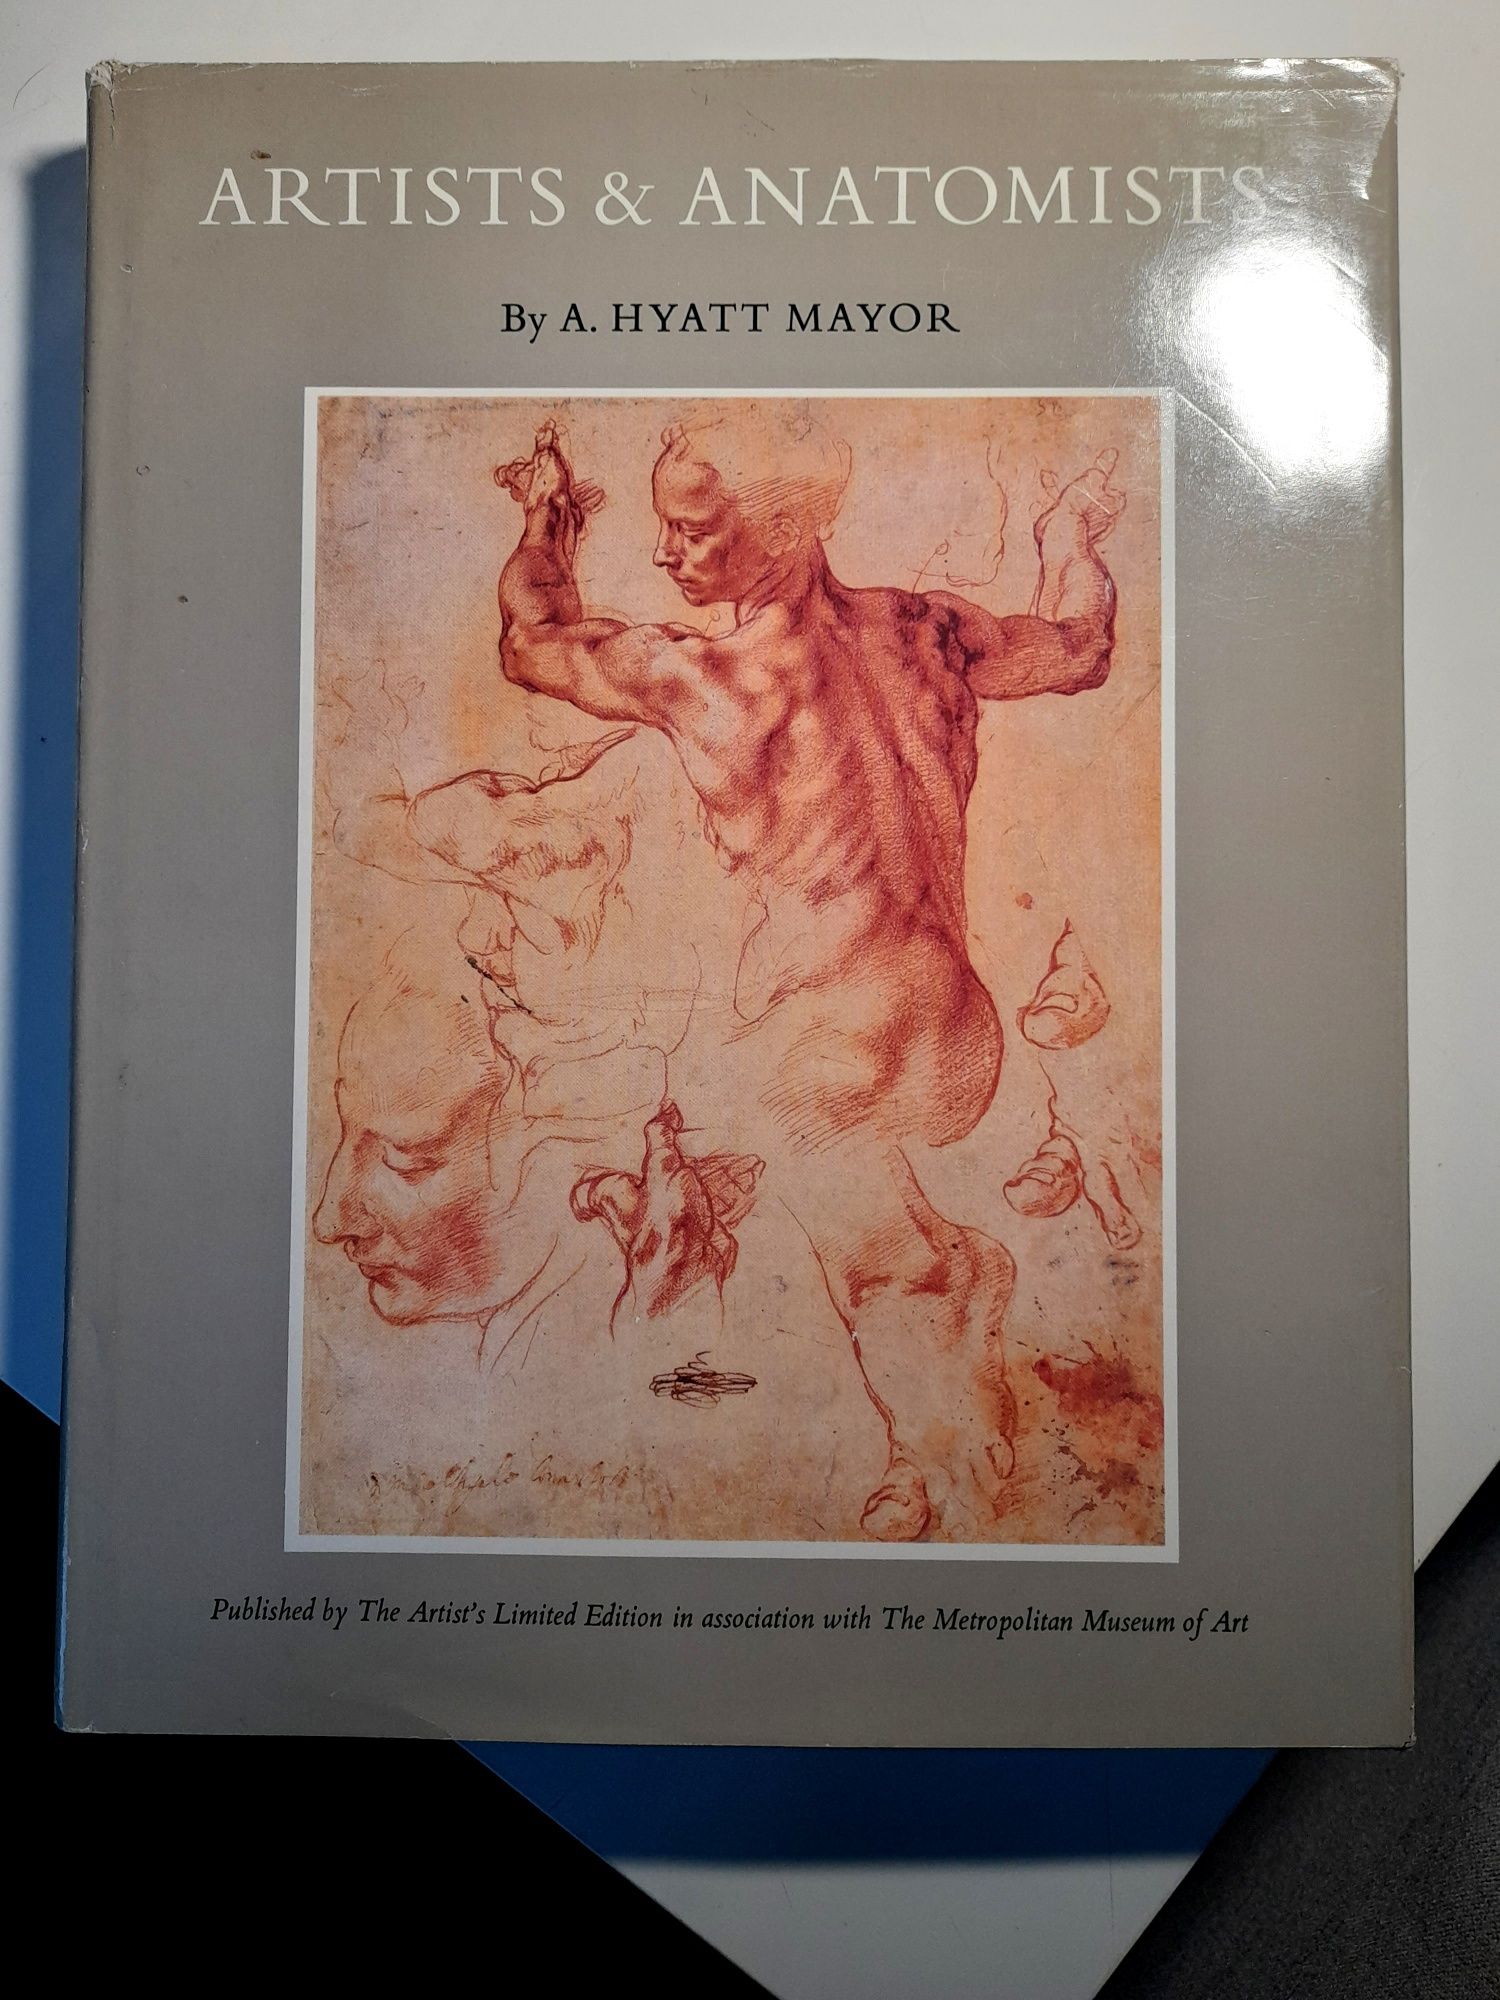 Artists & Anatomists by A. Hyatt Mayor